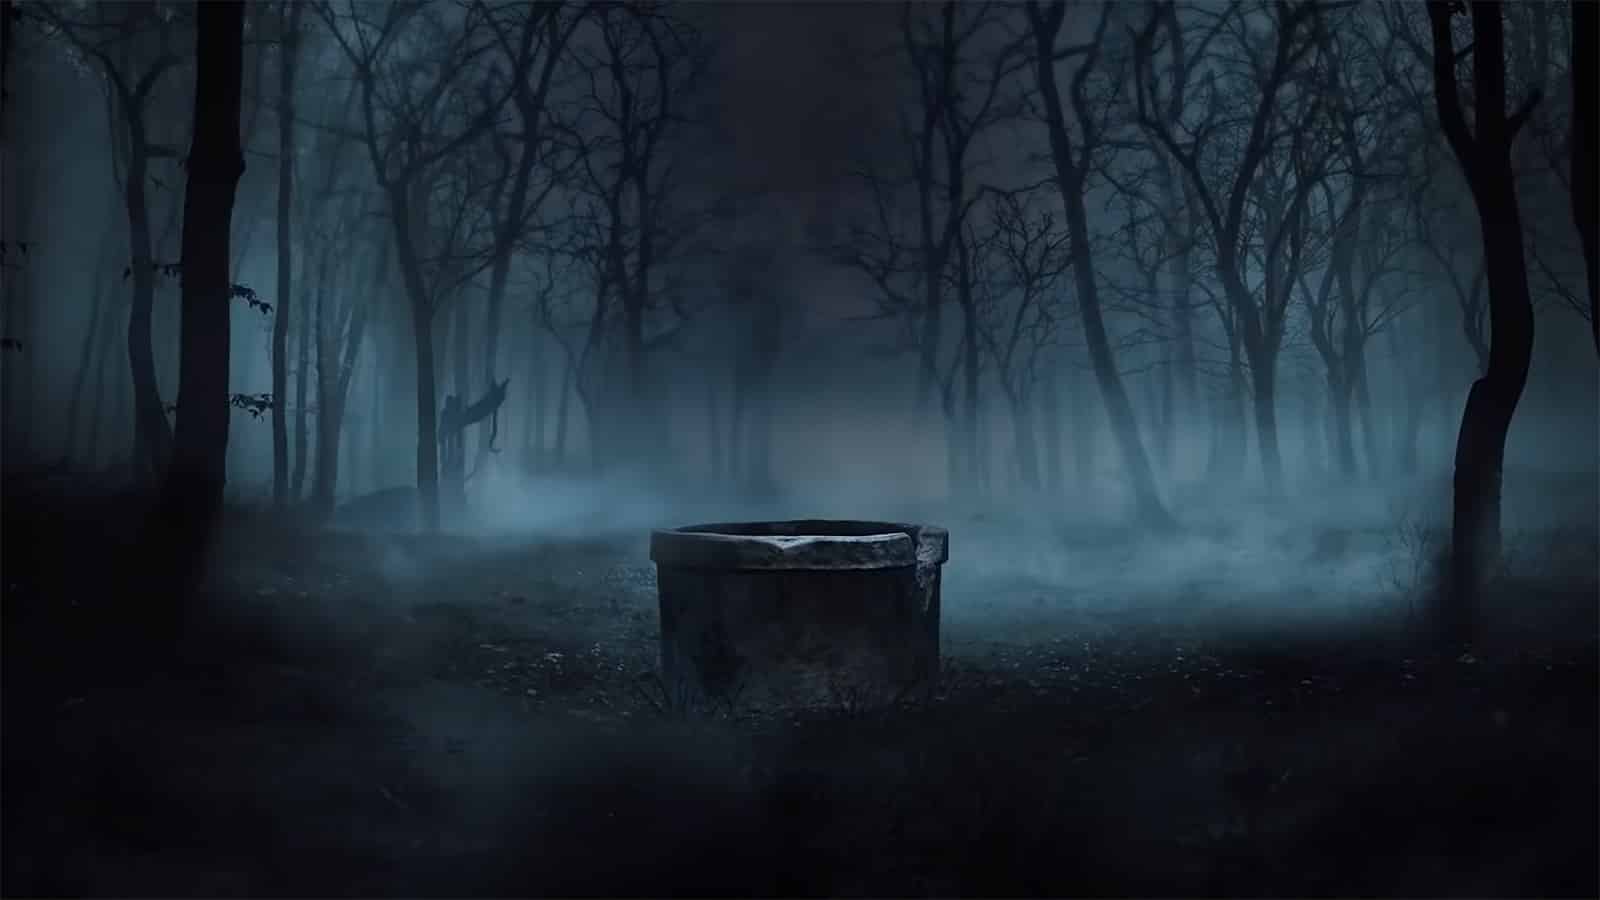 An image of Sadako's well in Dead by Daylight